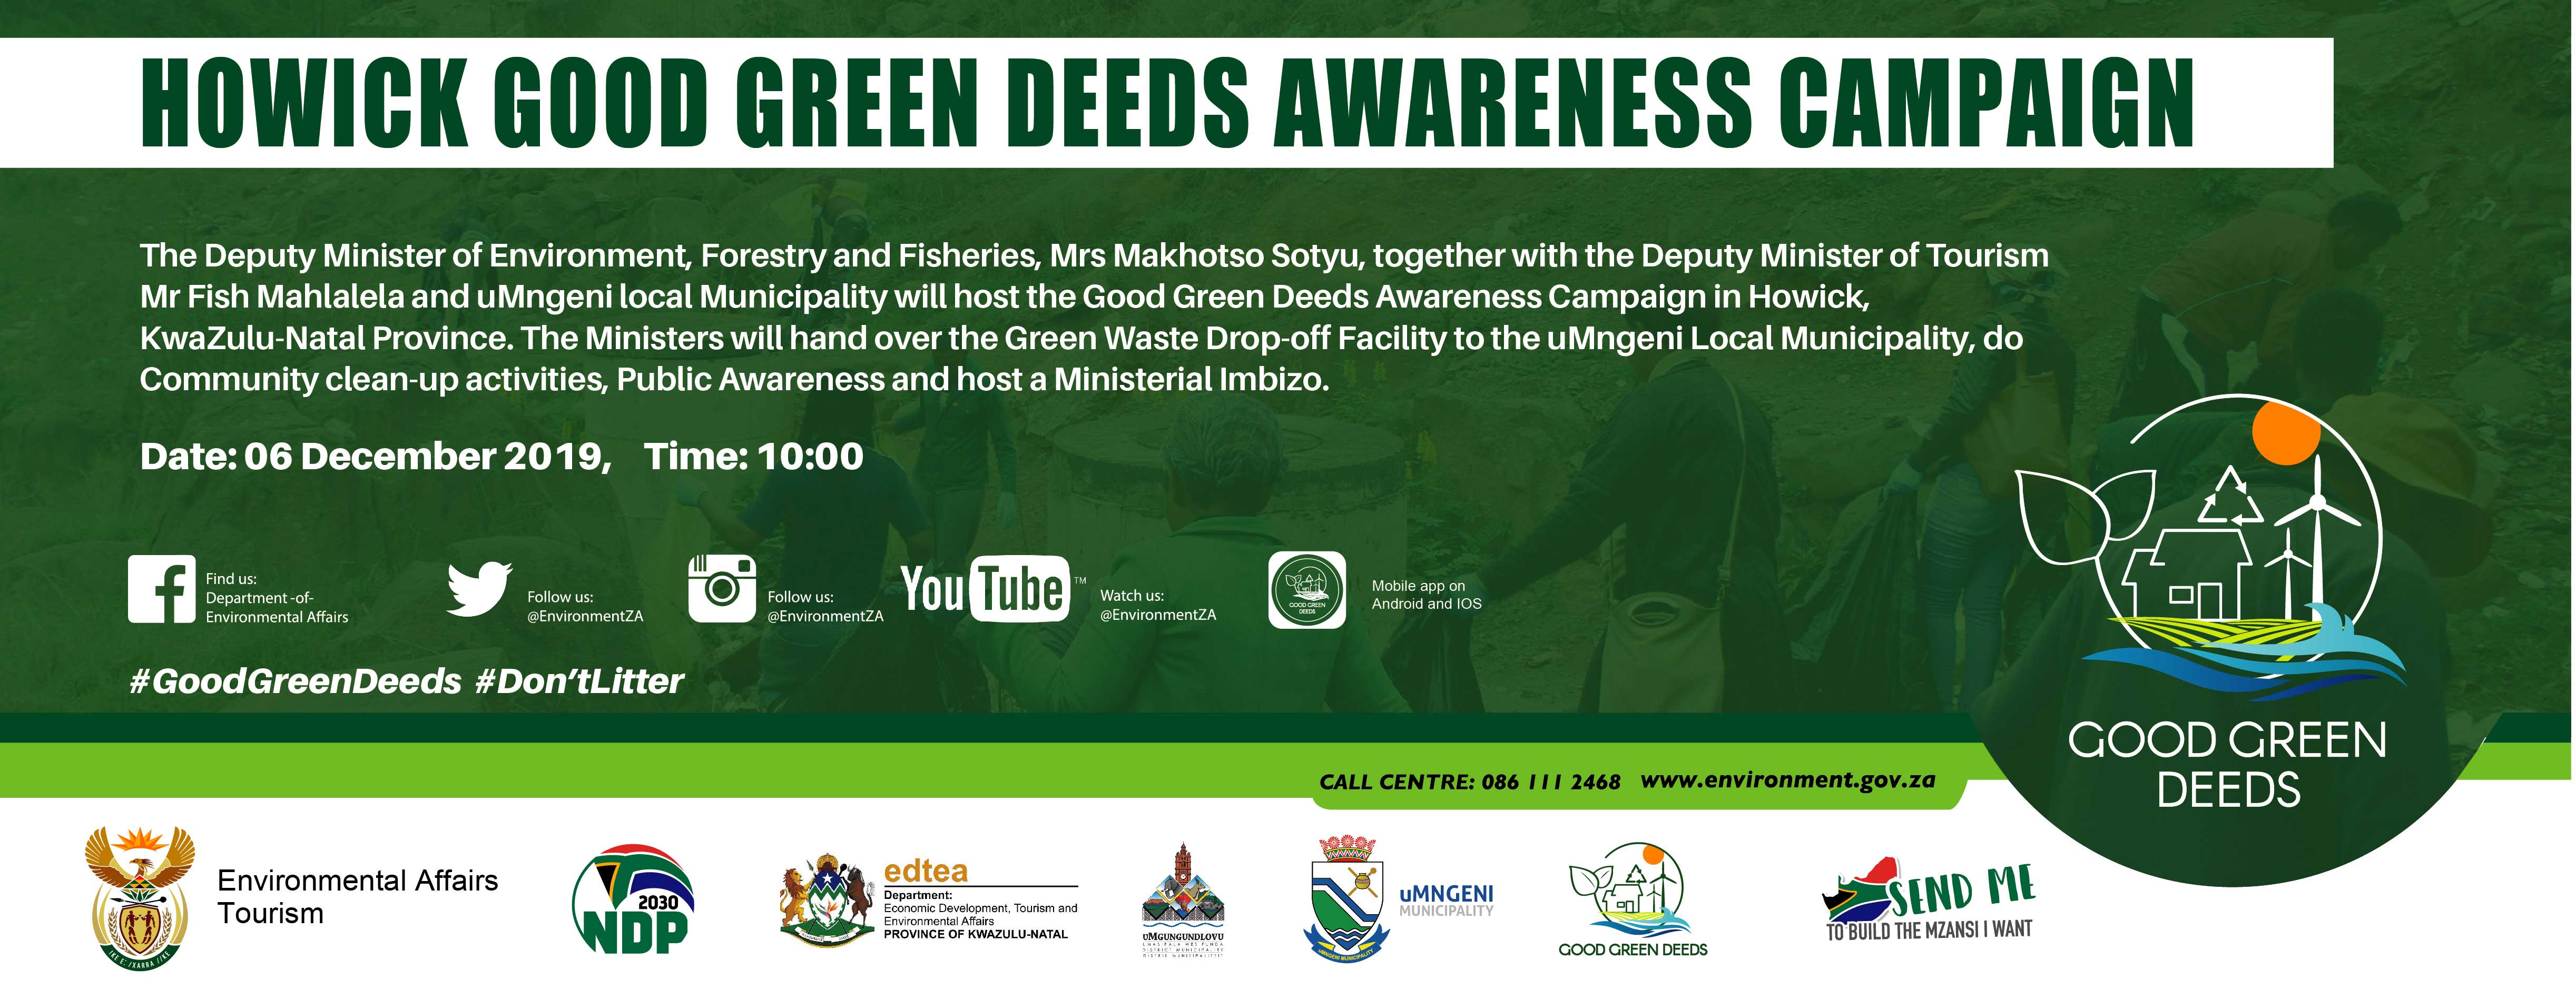 Deputy Ministers Sotyu and Mahlalela to lead Howick Good Green Deeds Awareness Campaign